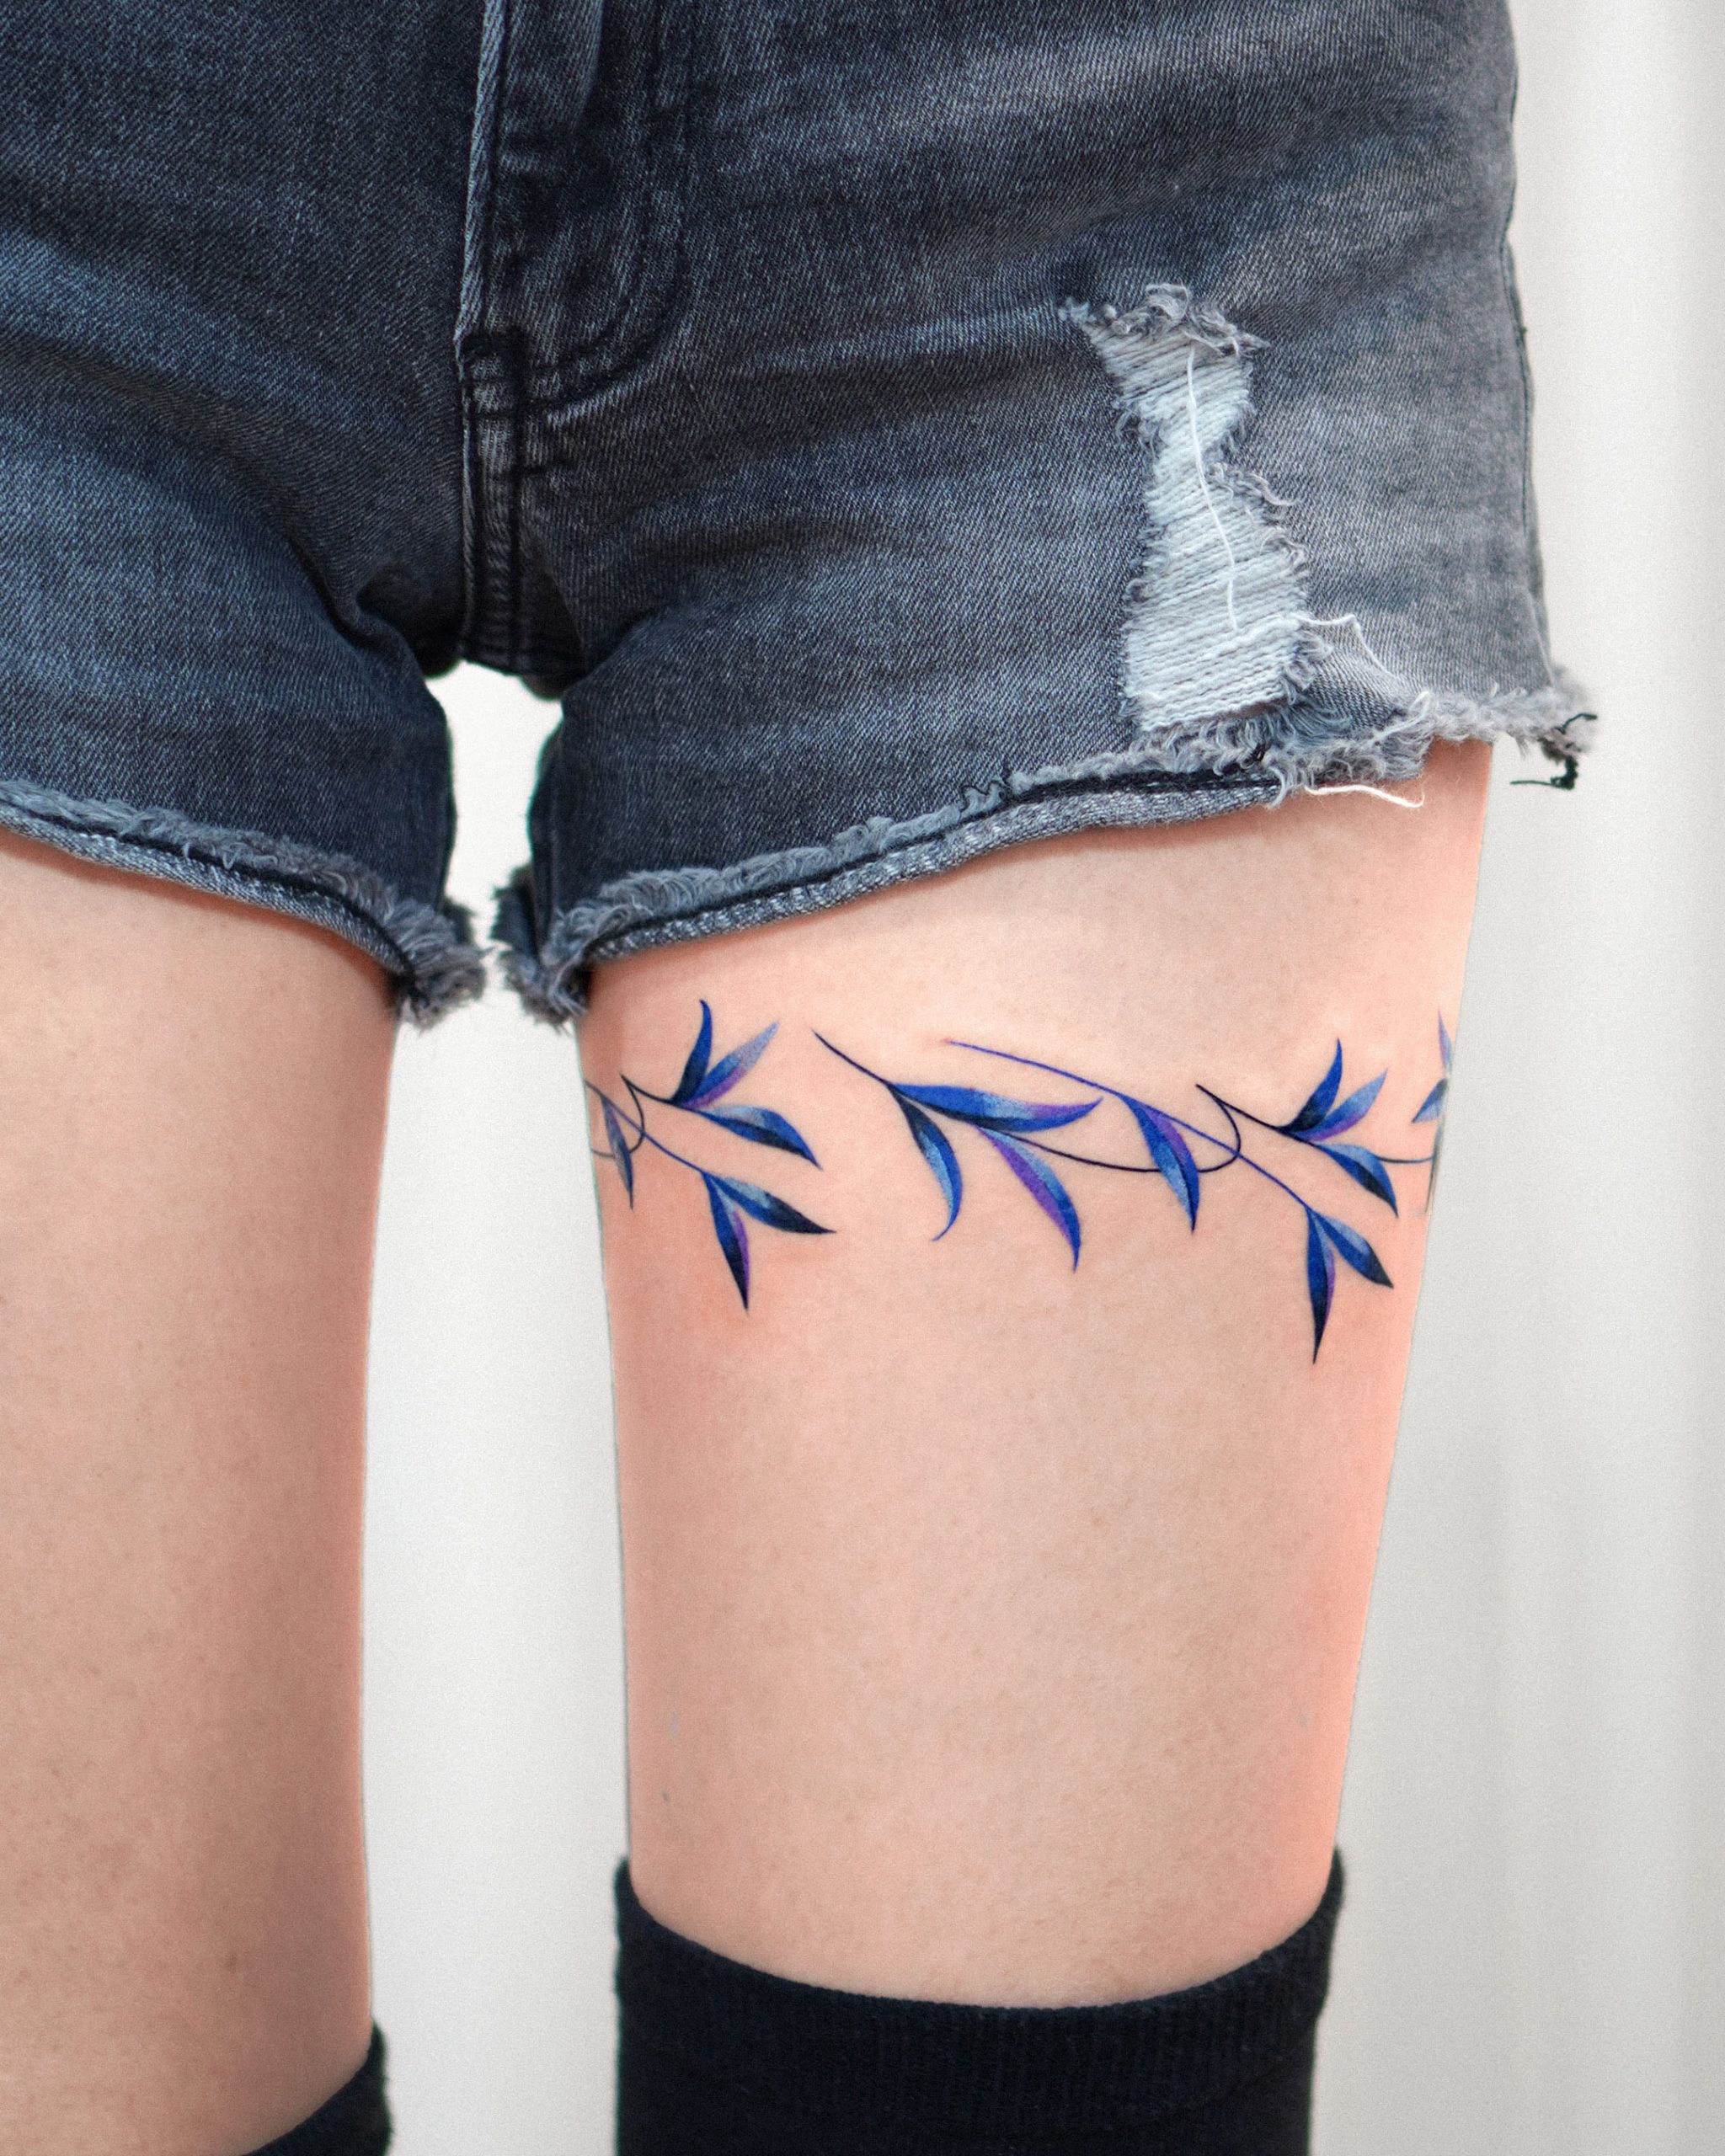 Anklet Tattoo by jayblum on DeviantArt